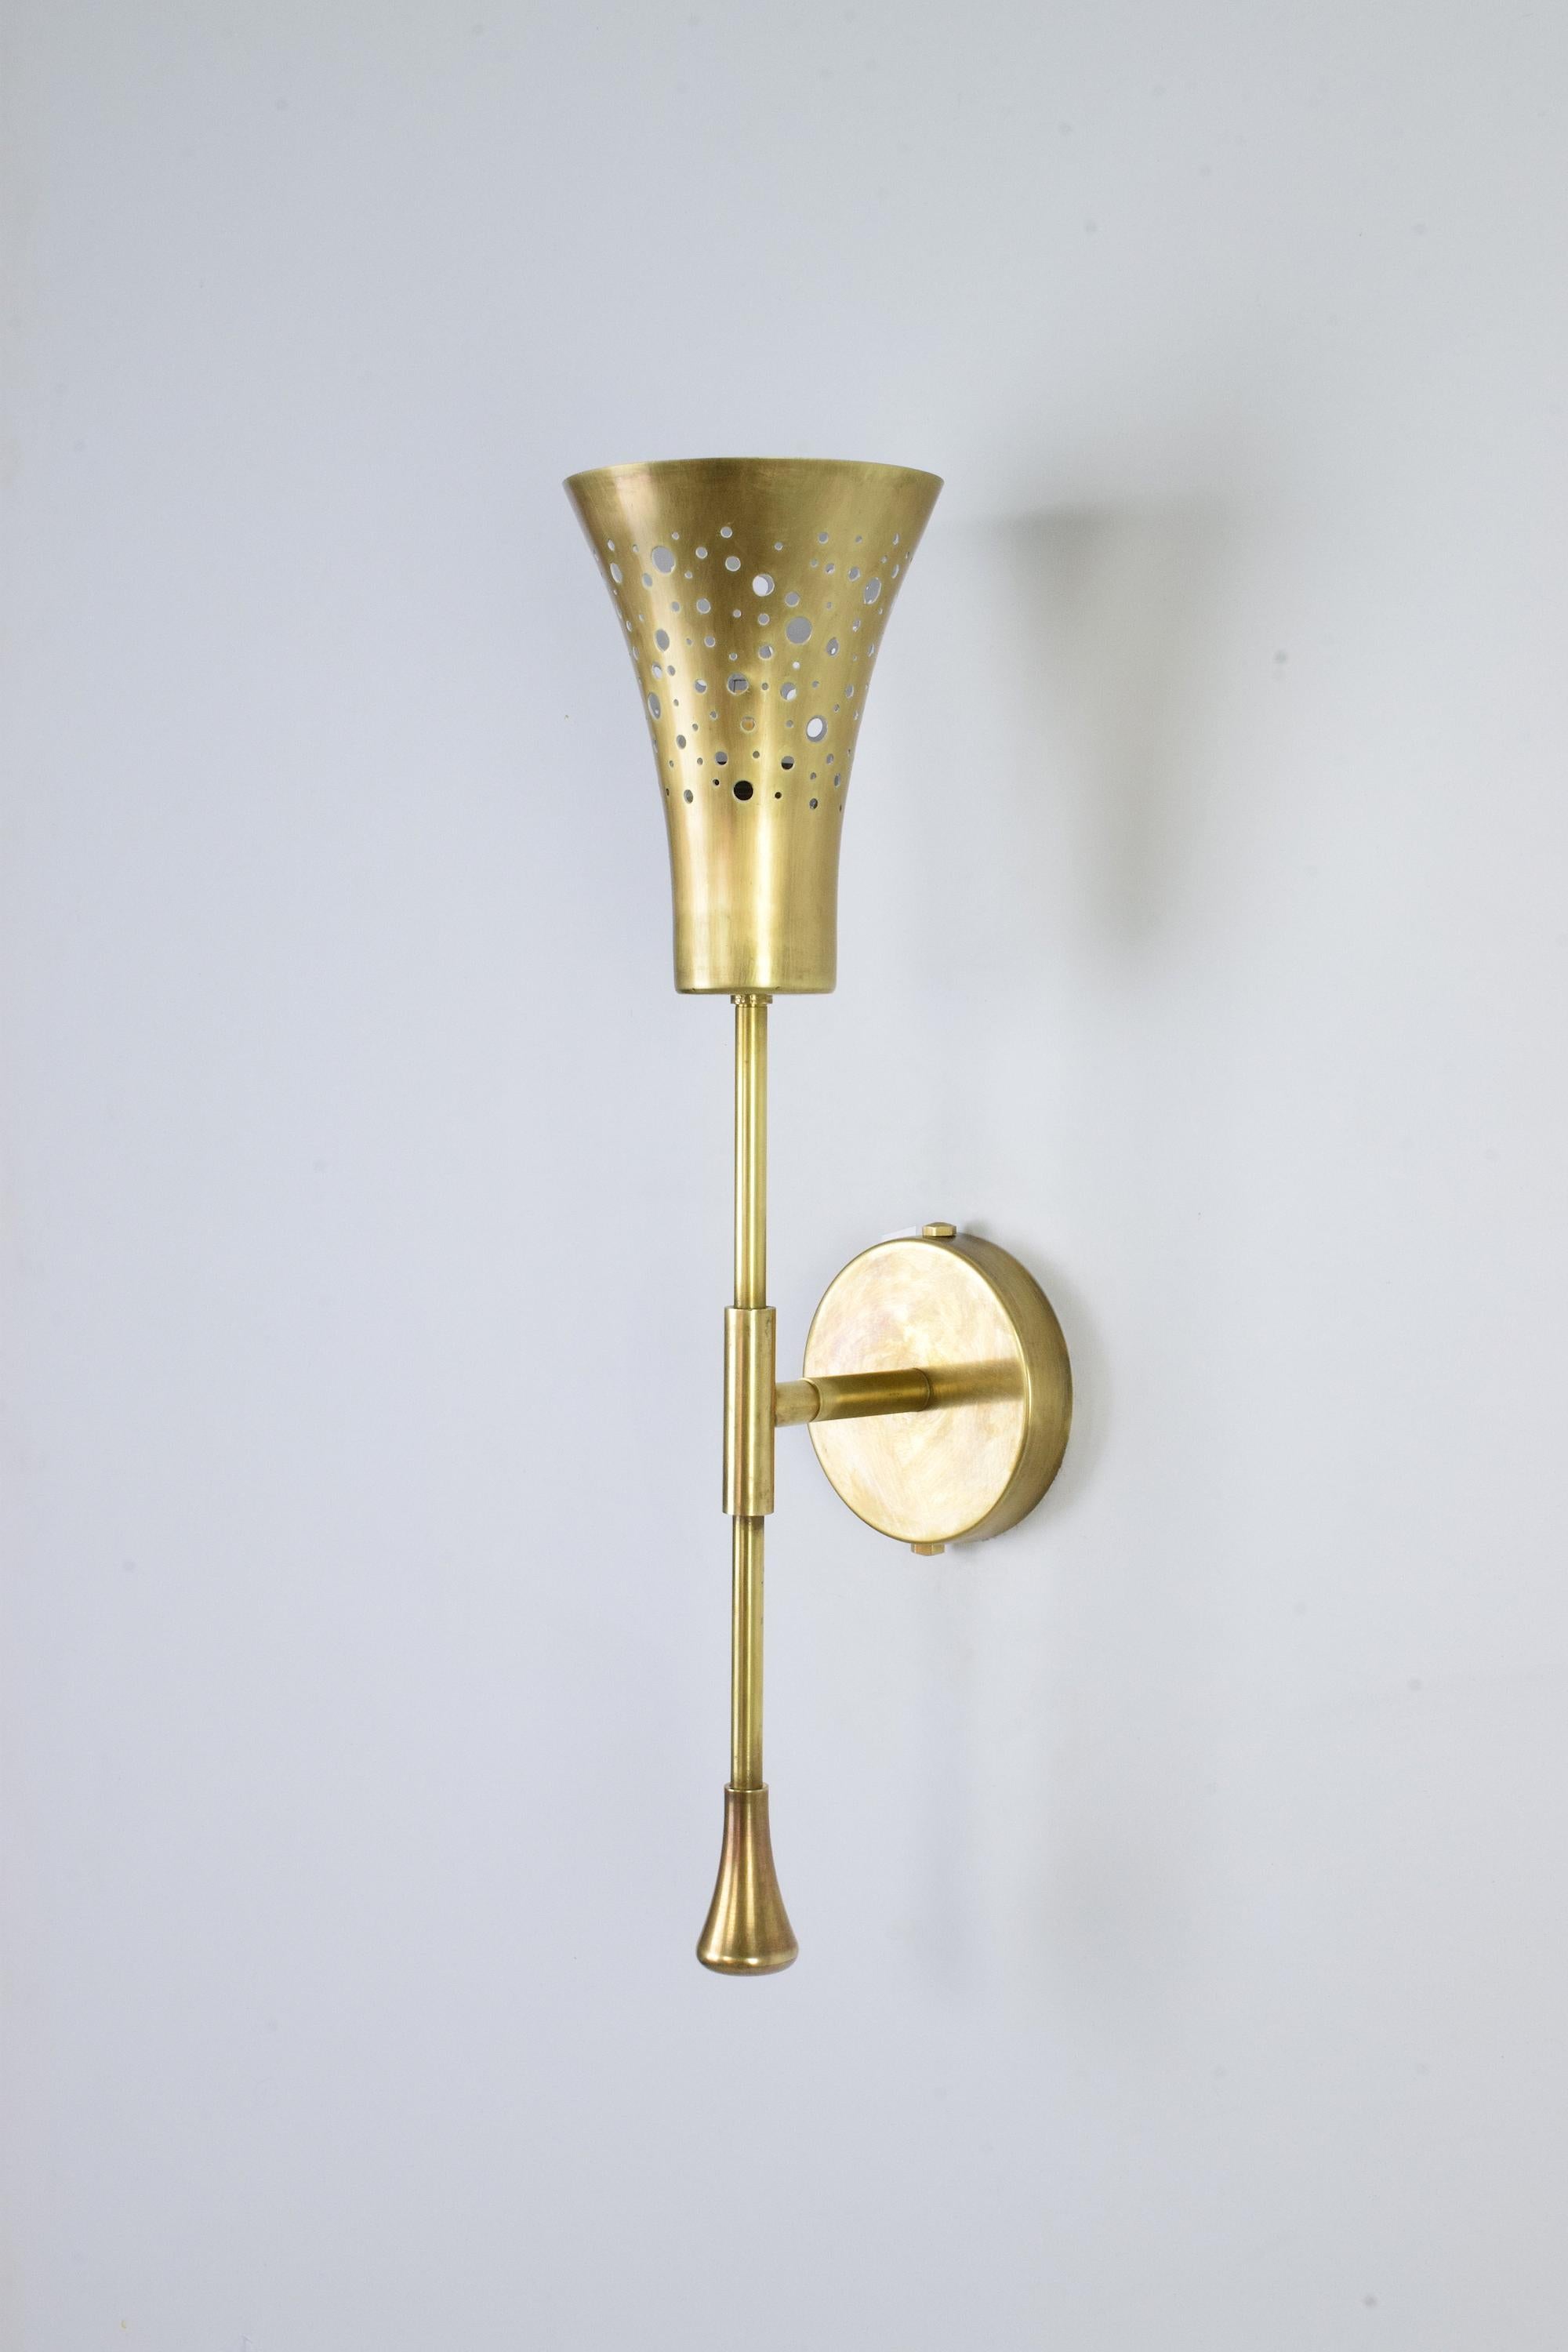 Orbi-WM1 Contemporary Brass Articulating Wall Light, Flow Collection 2